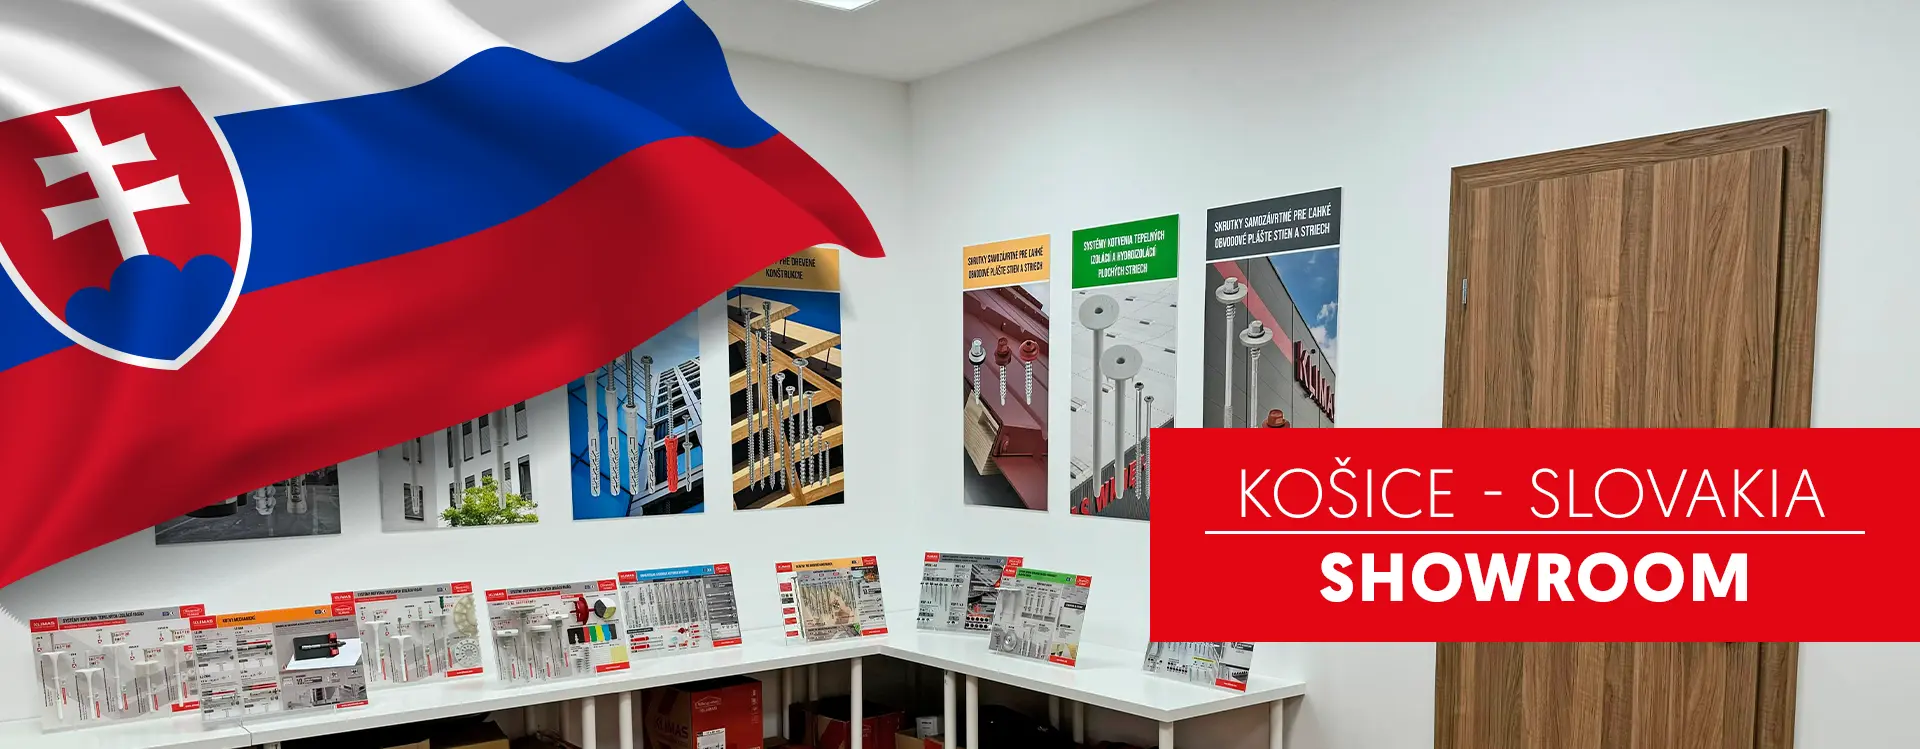 New brand showroom in Slovakia